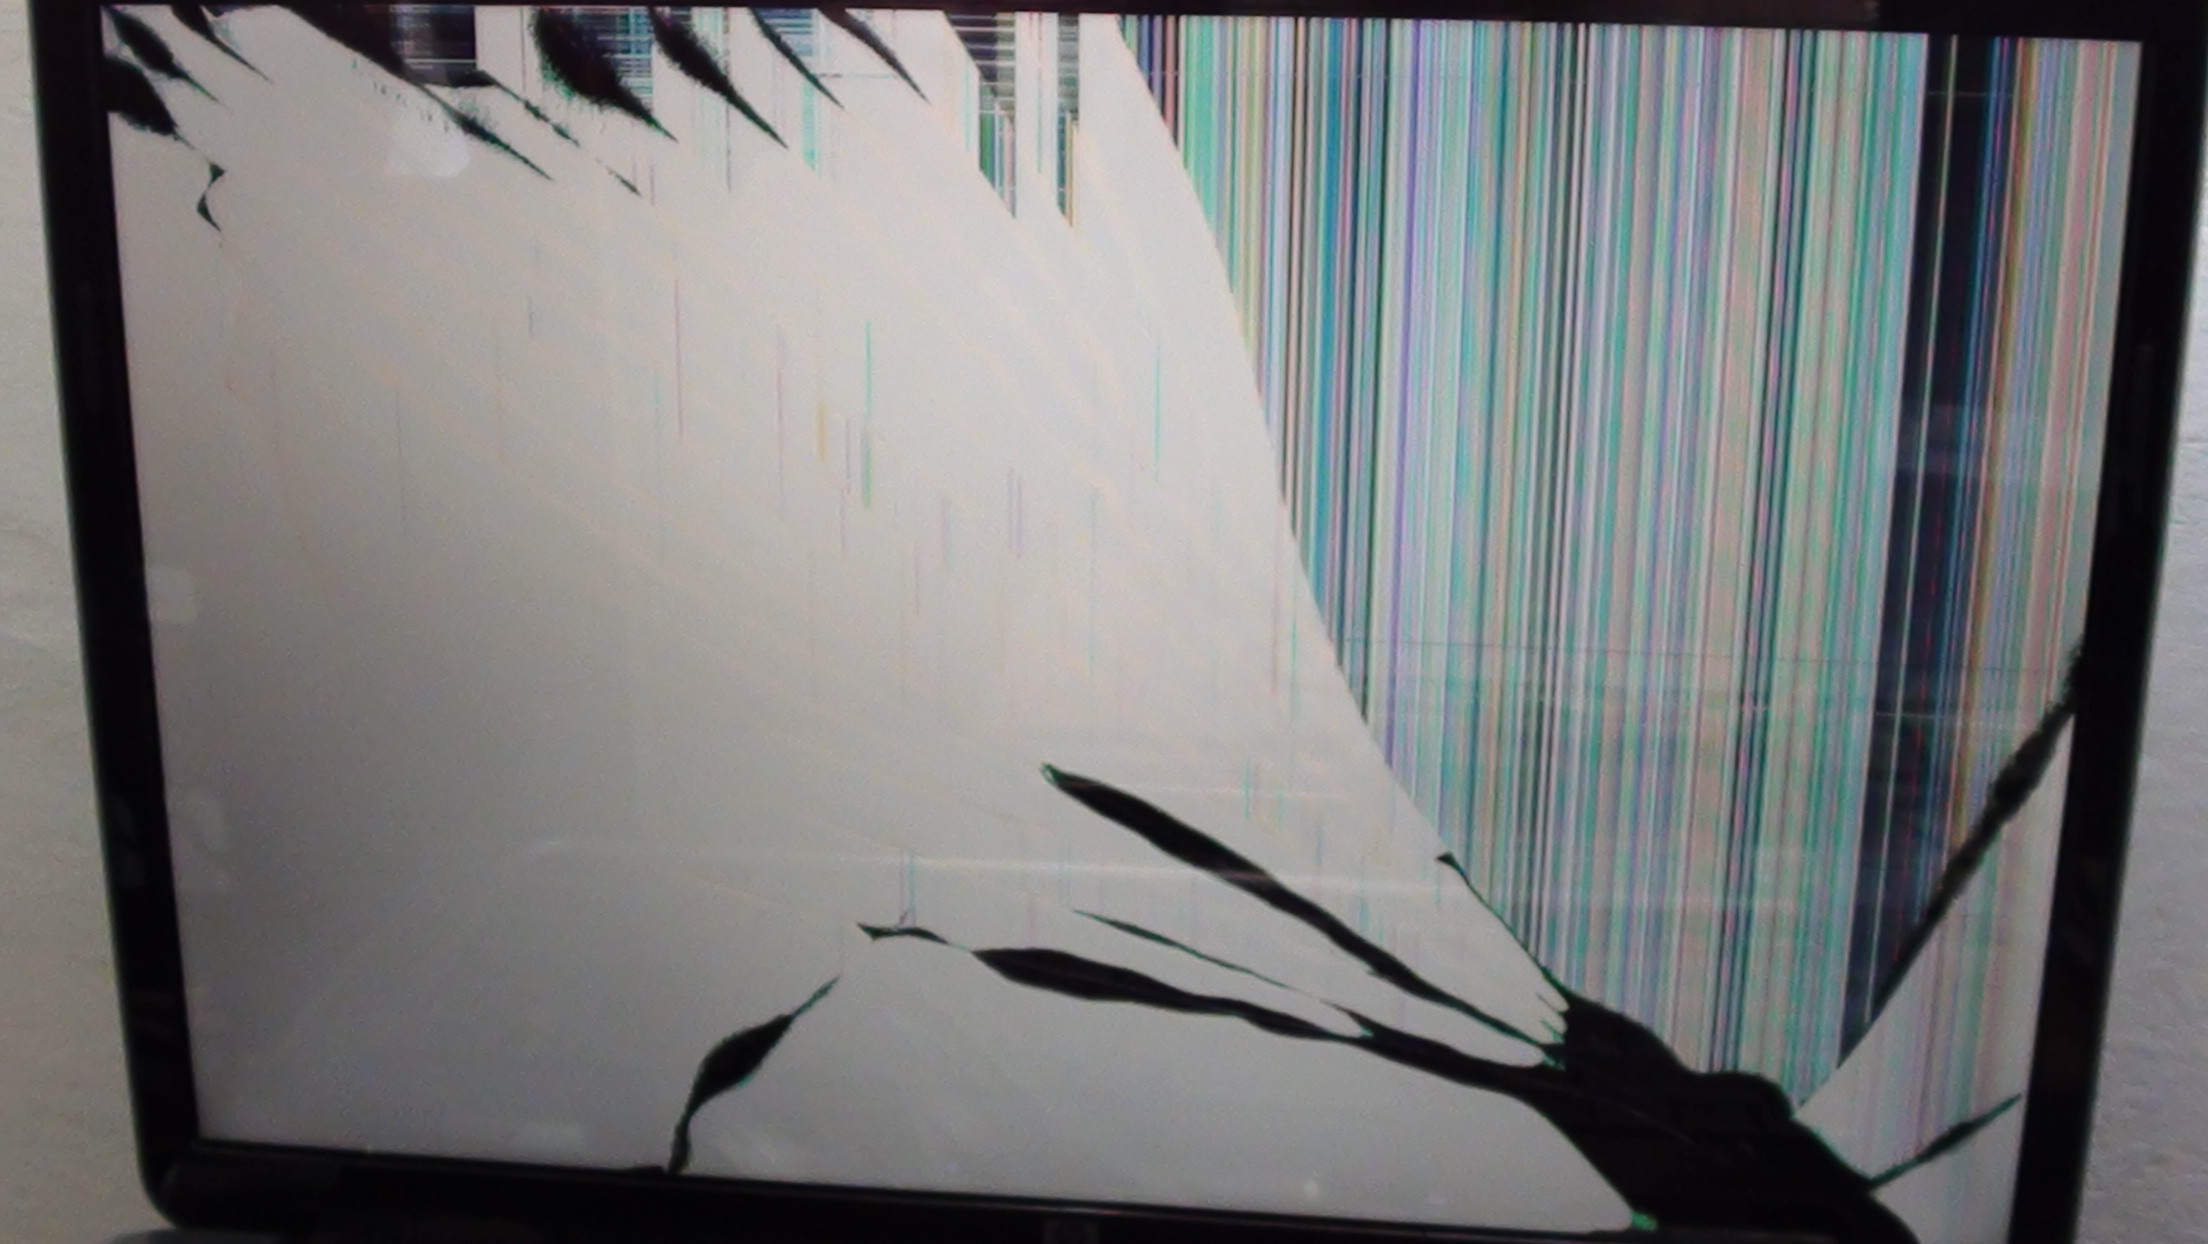 Cracked Screen Prank To crack my screen